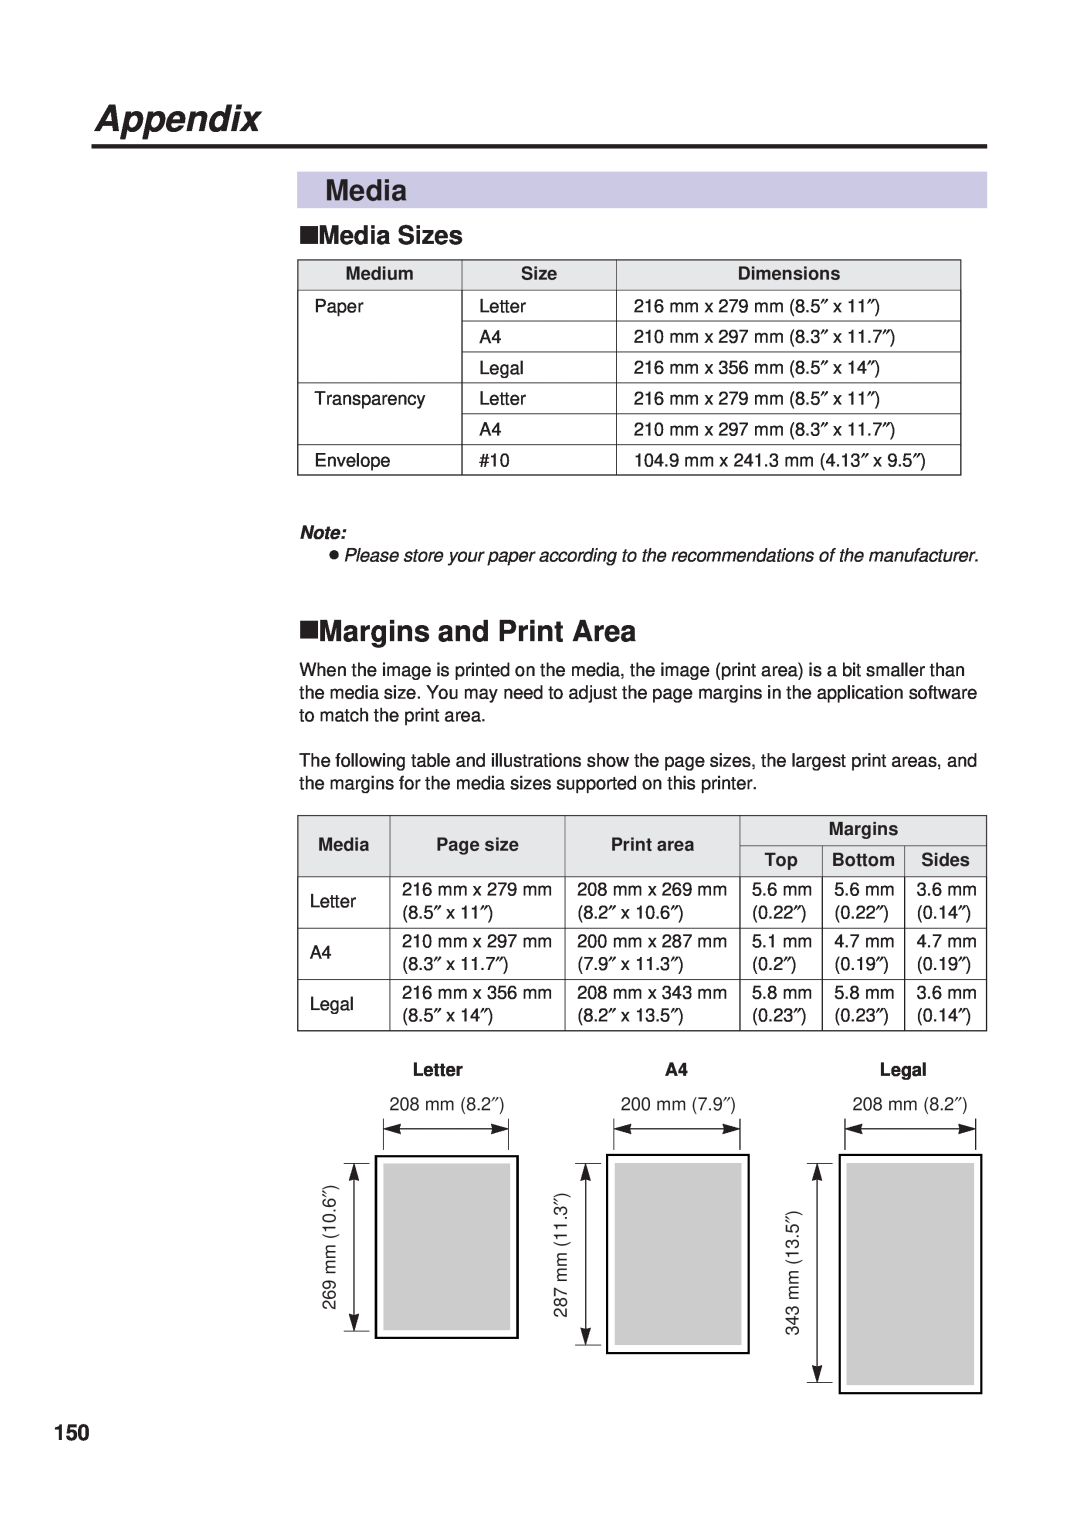 Panasonic KX-PS8000 Media Sizes, Appendix, Margins and Print Area, Medium, Dimensions, Page size, Print area, Bottom 